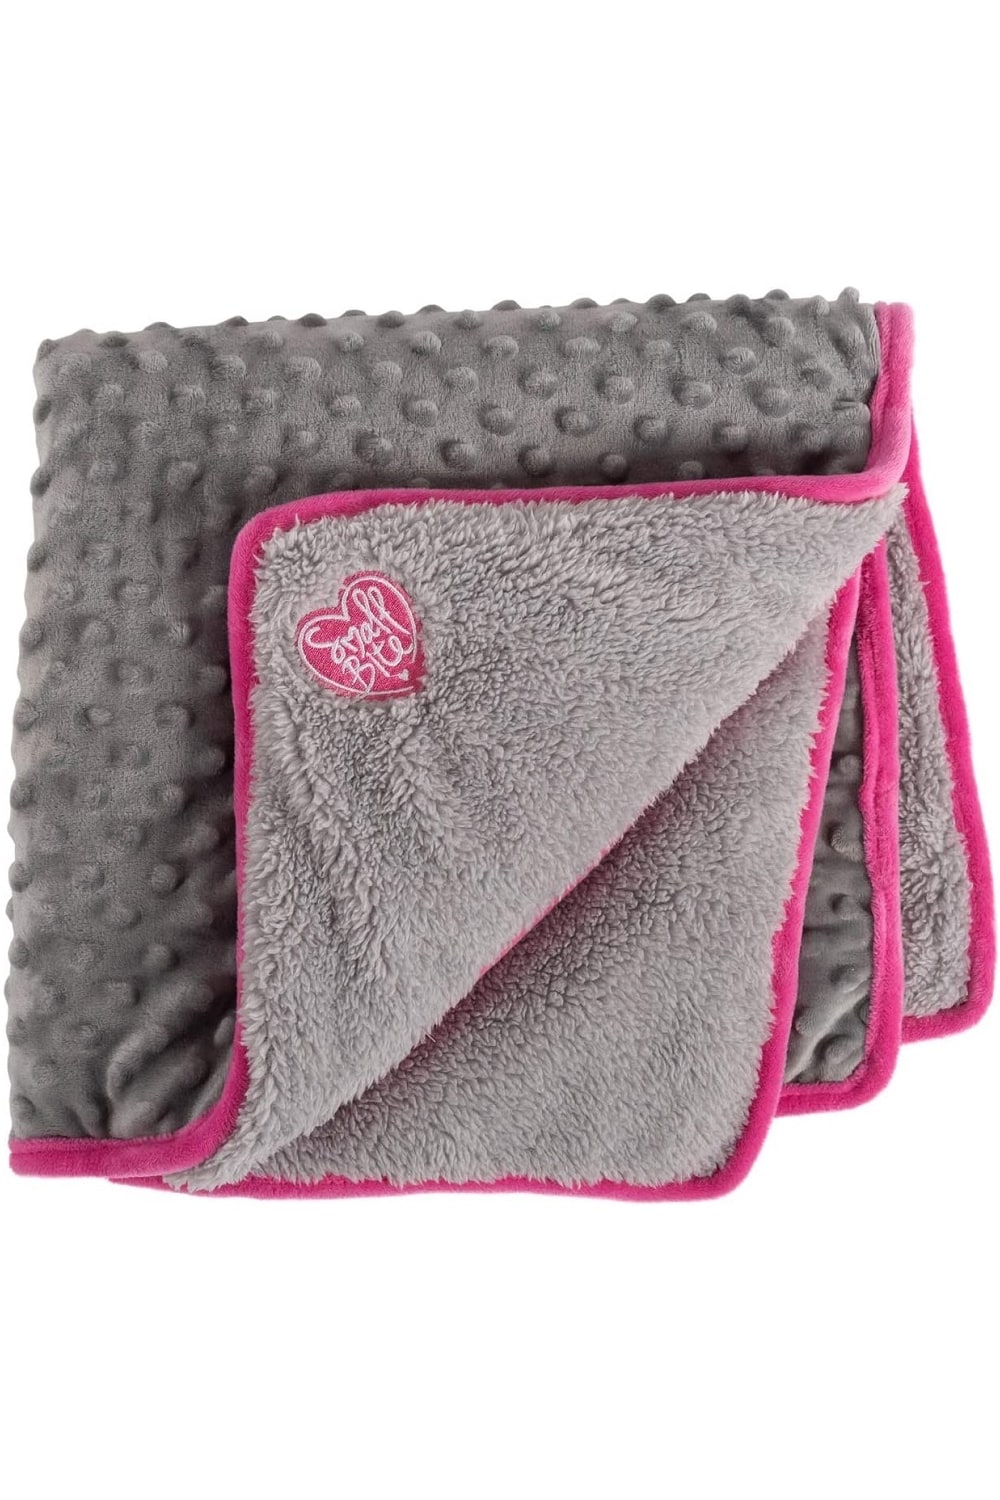 Ancol Pocket Dog Blanket (Gray/Pink) (60cm x 60cm)